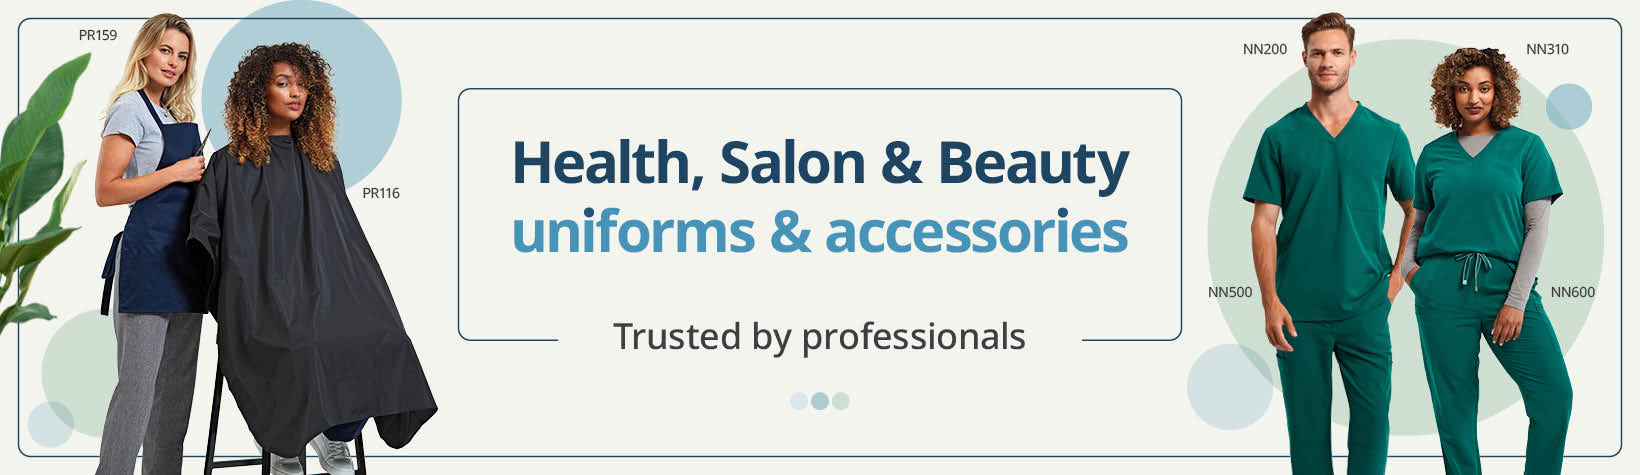 The Health, Salon & Beauty collection